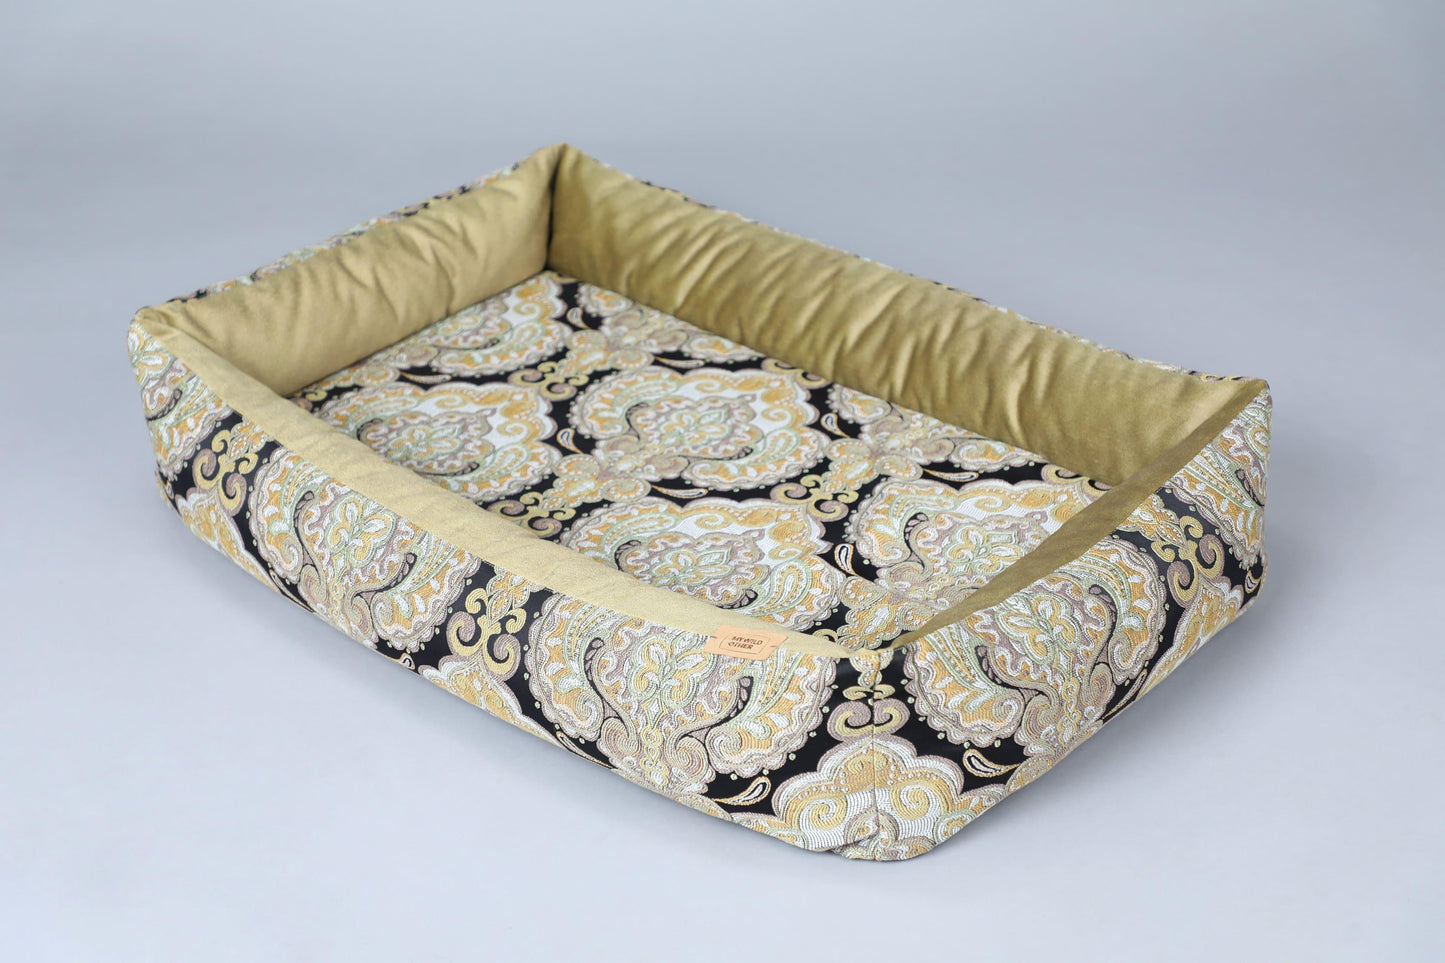 2-sided bohemian style dog bed. DARK KHAKI - premium dog goods handmade in Europe by animalistus